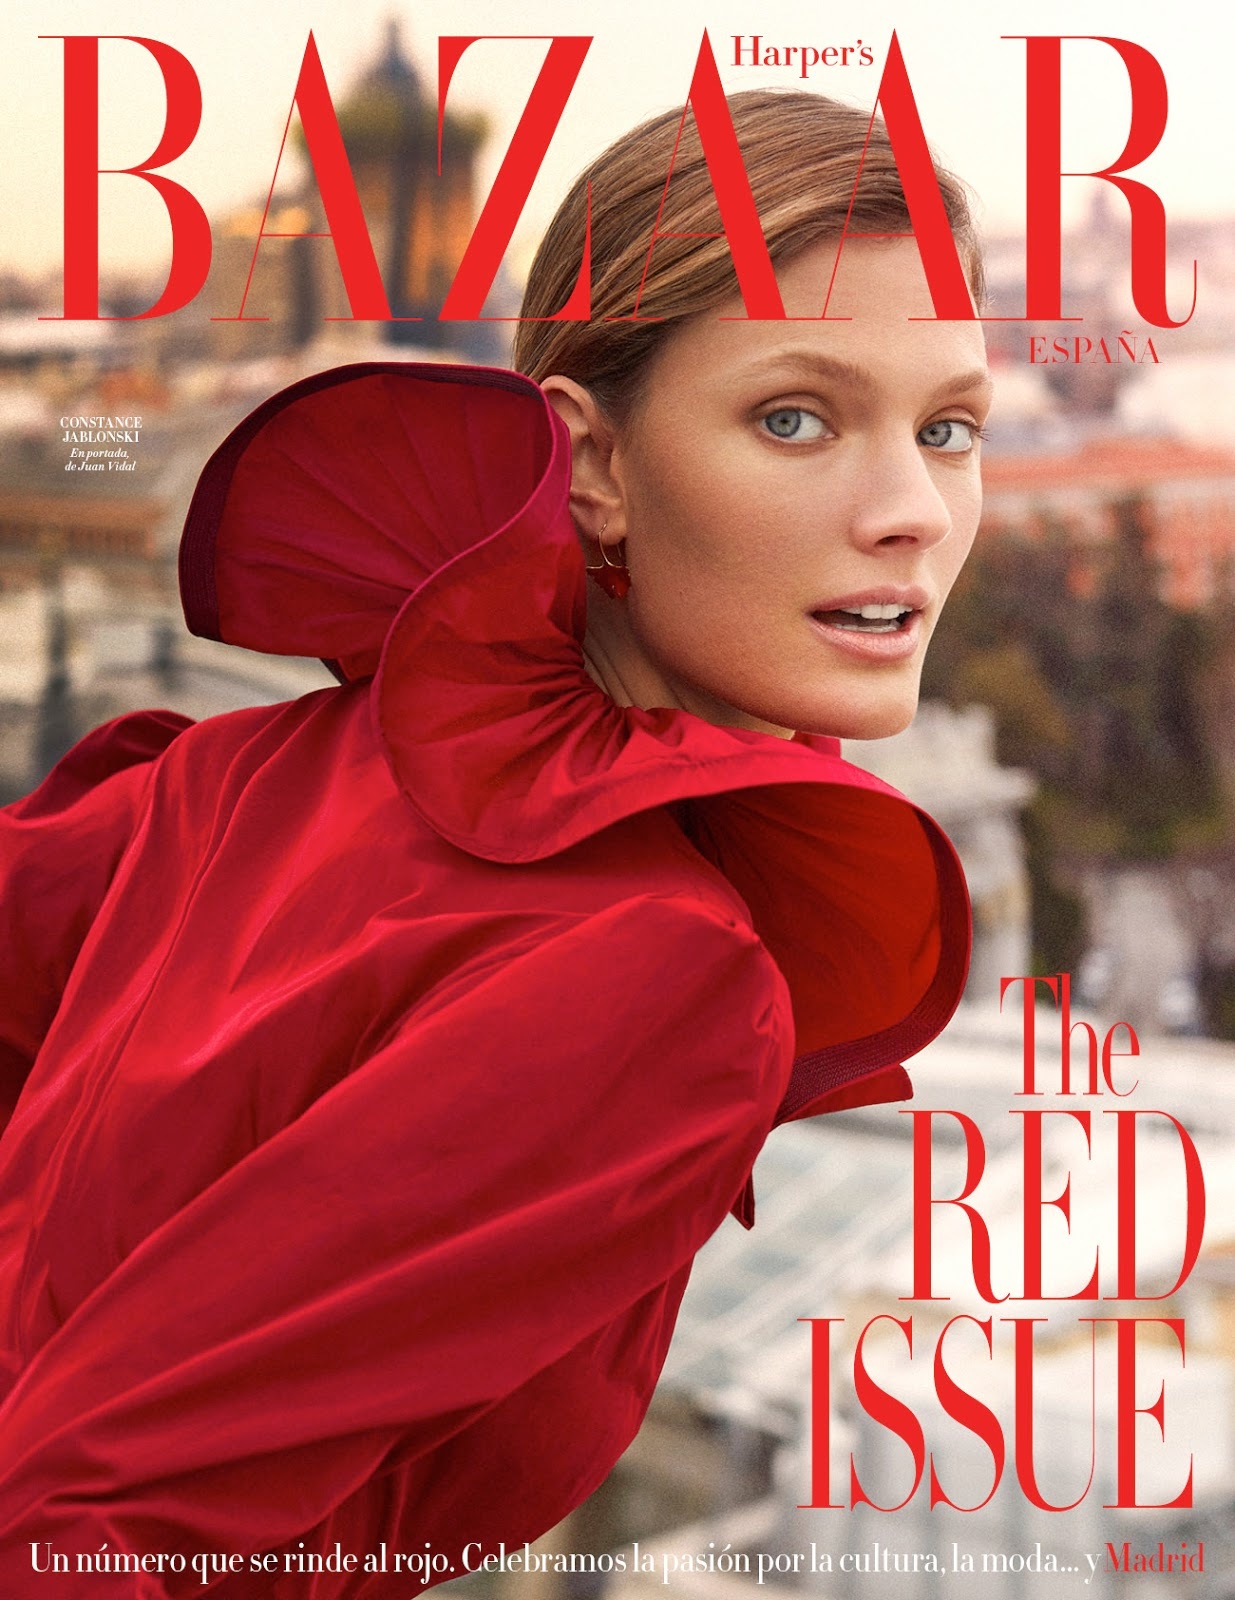 Harper's Bazaar Spain February 2021 Cover Story Editorial